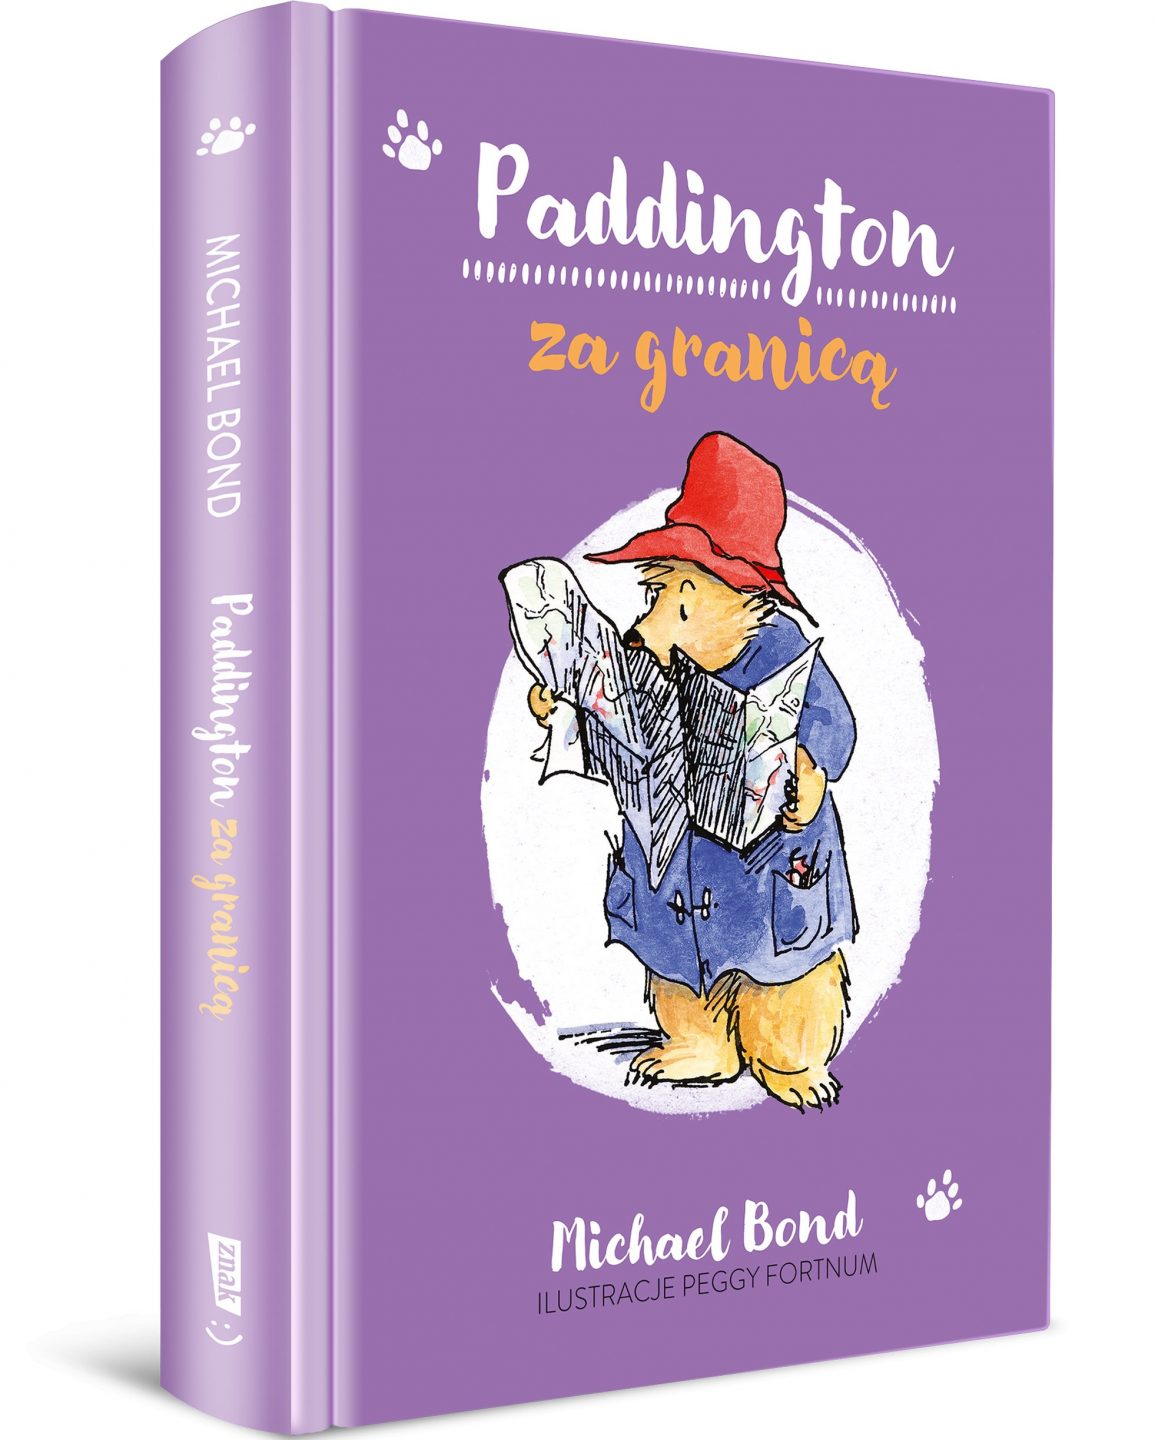 Okładka książki: Paddington za granicą